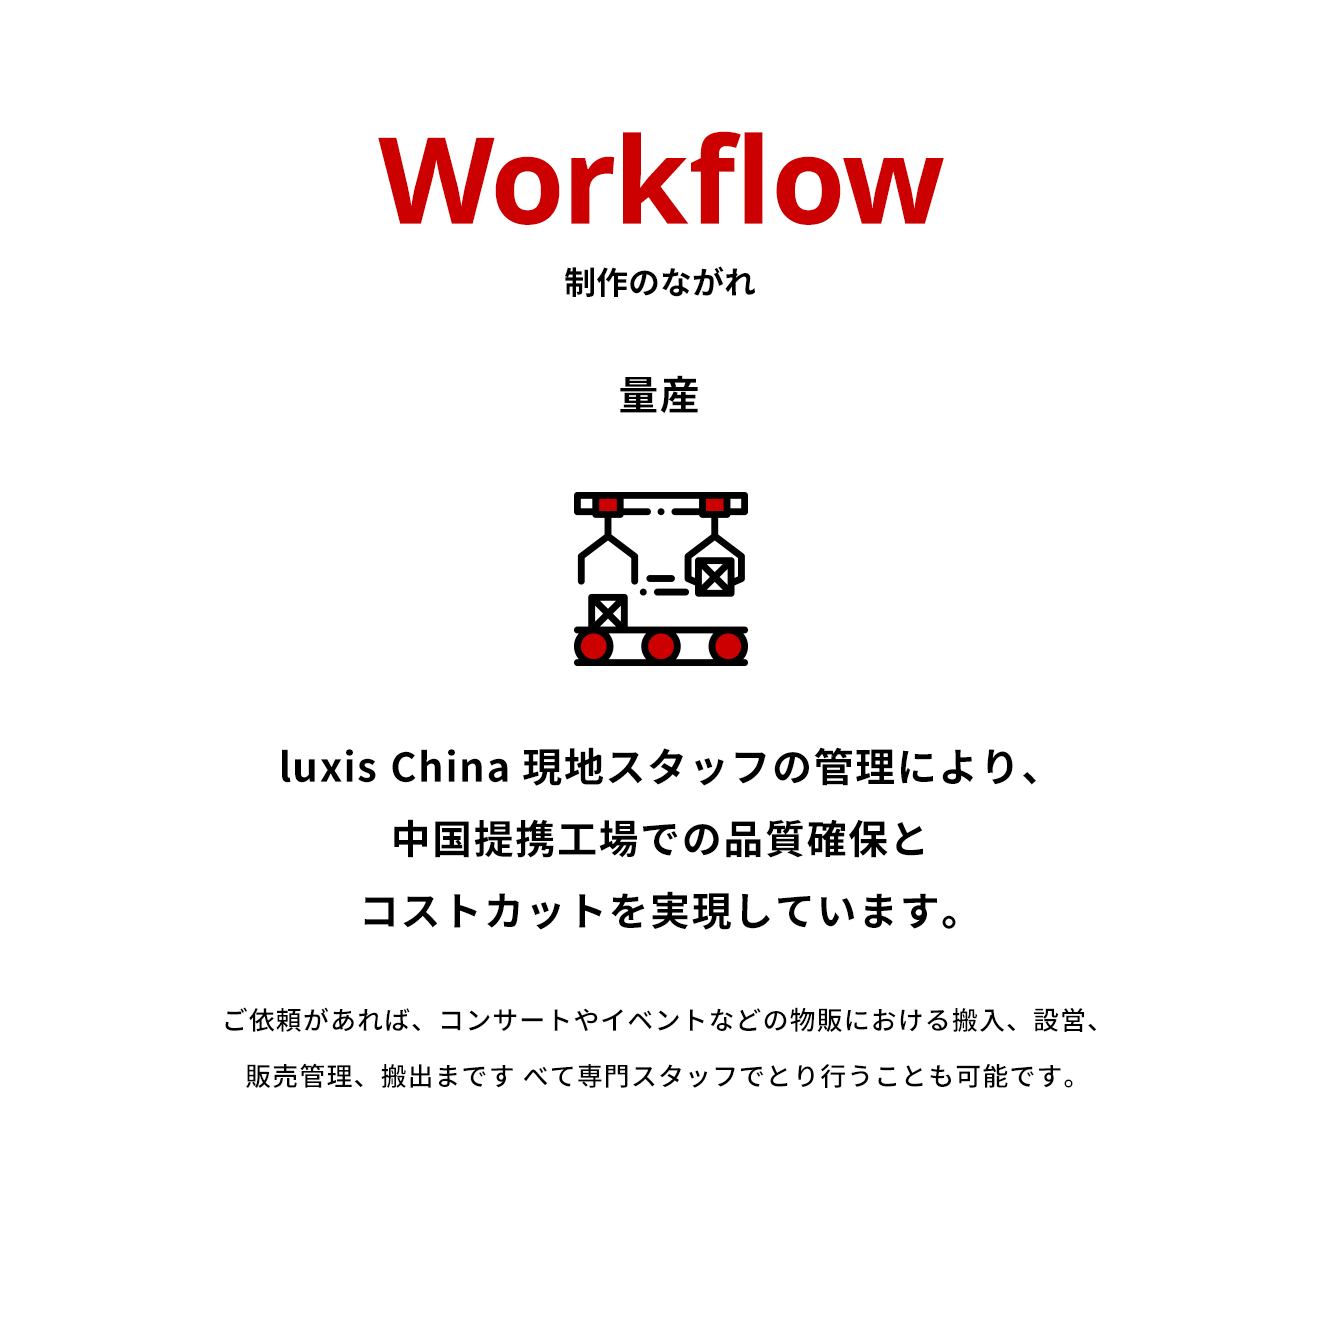 Workflow 制作のながれ 量産